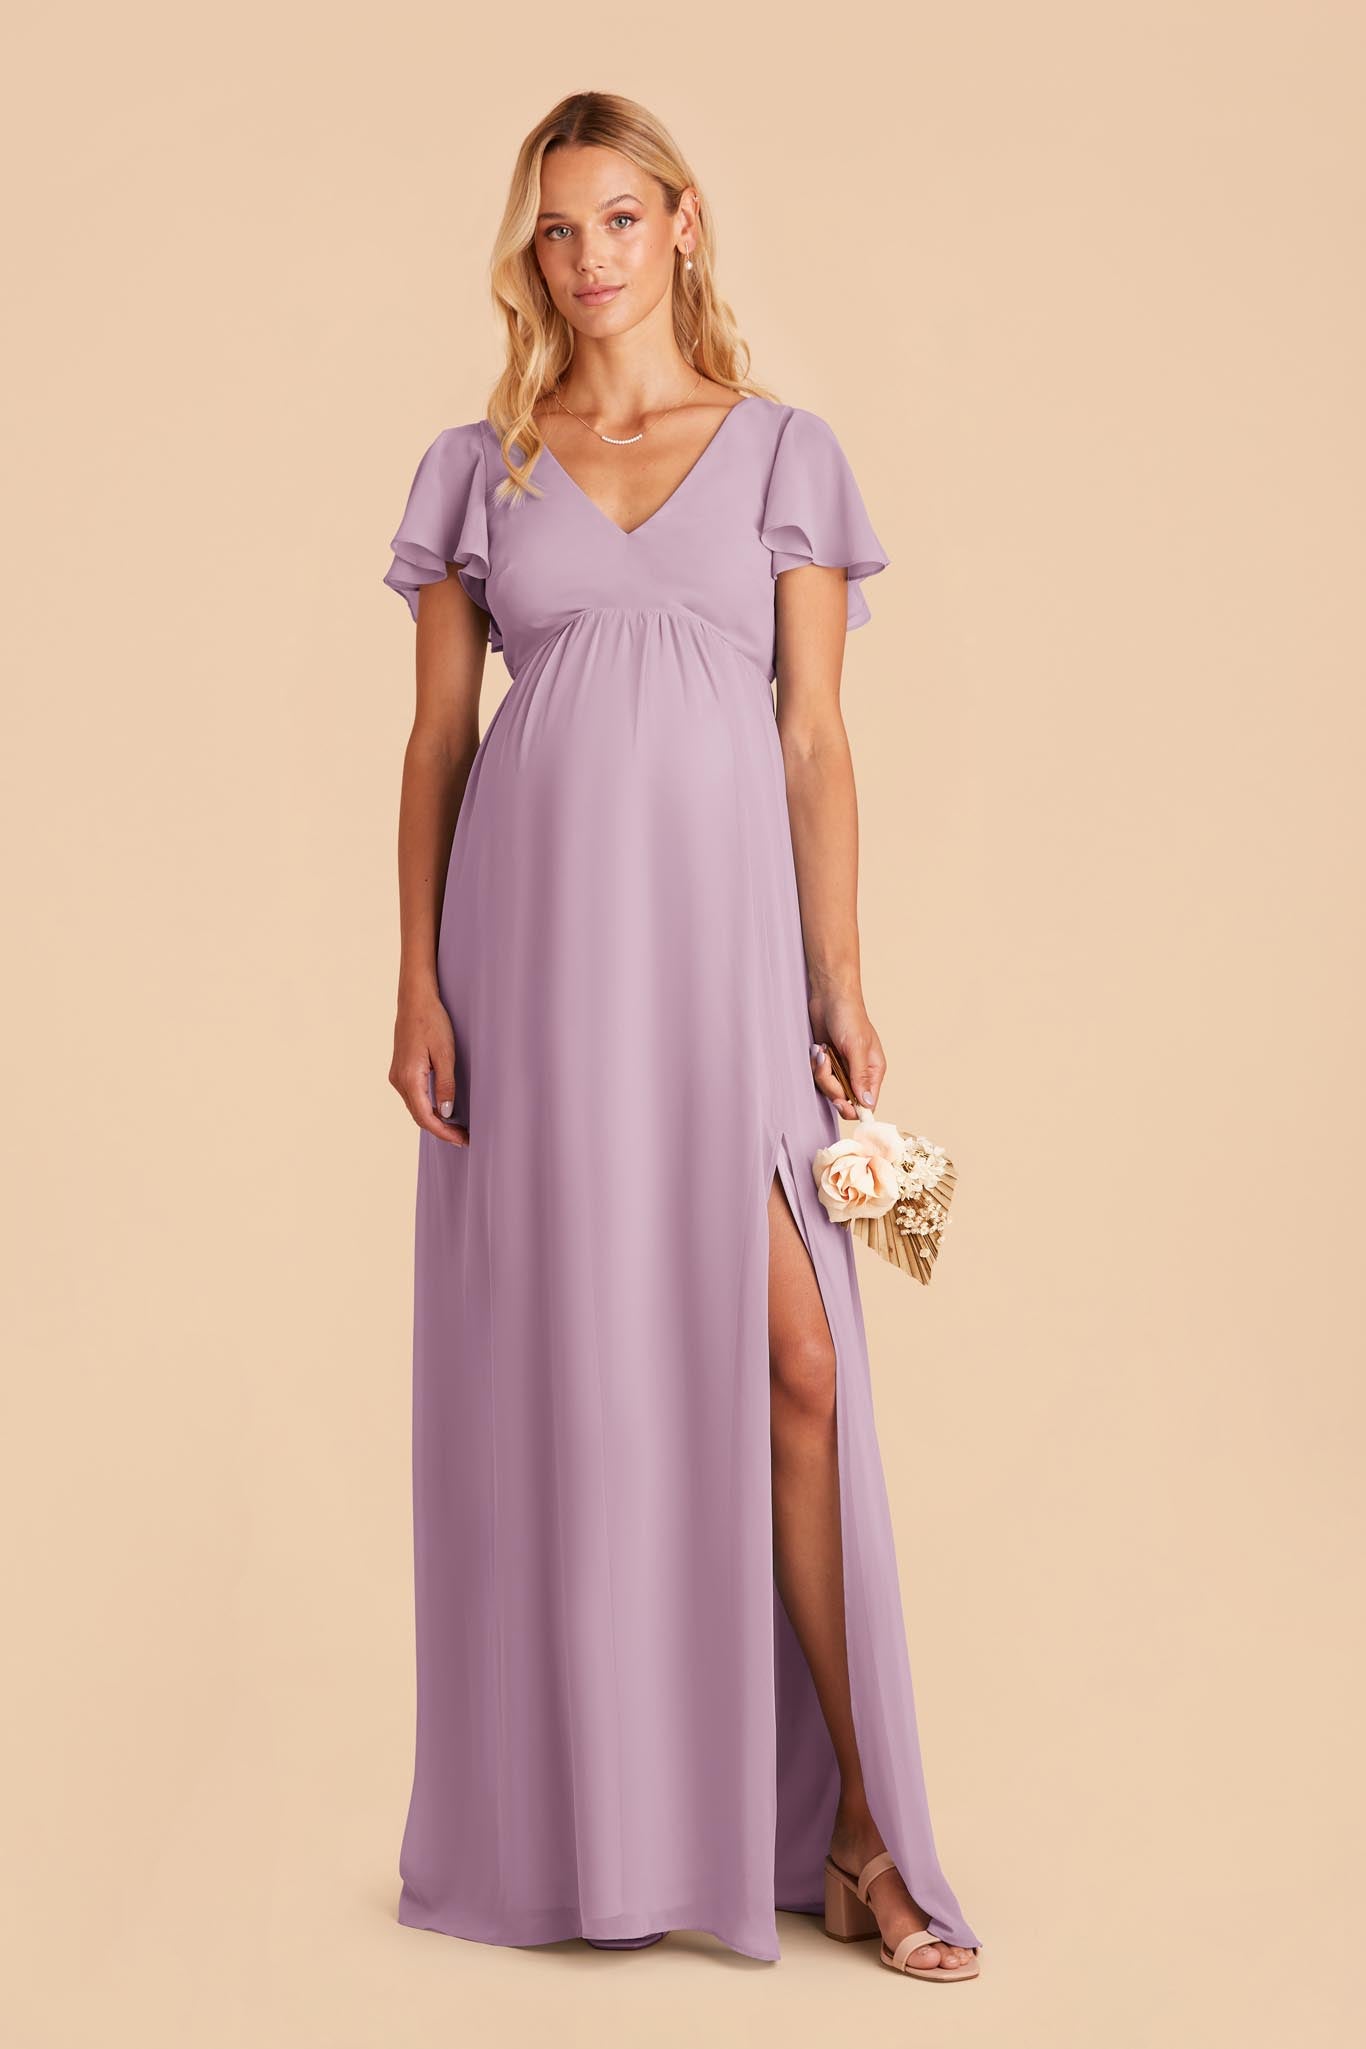 Lavender Hannah Empire Dress by Birdy Grey